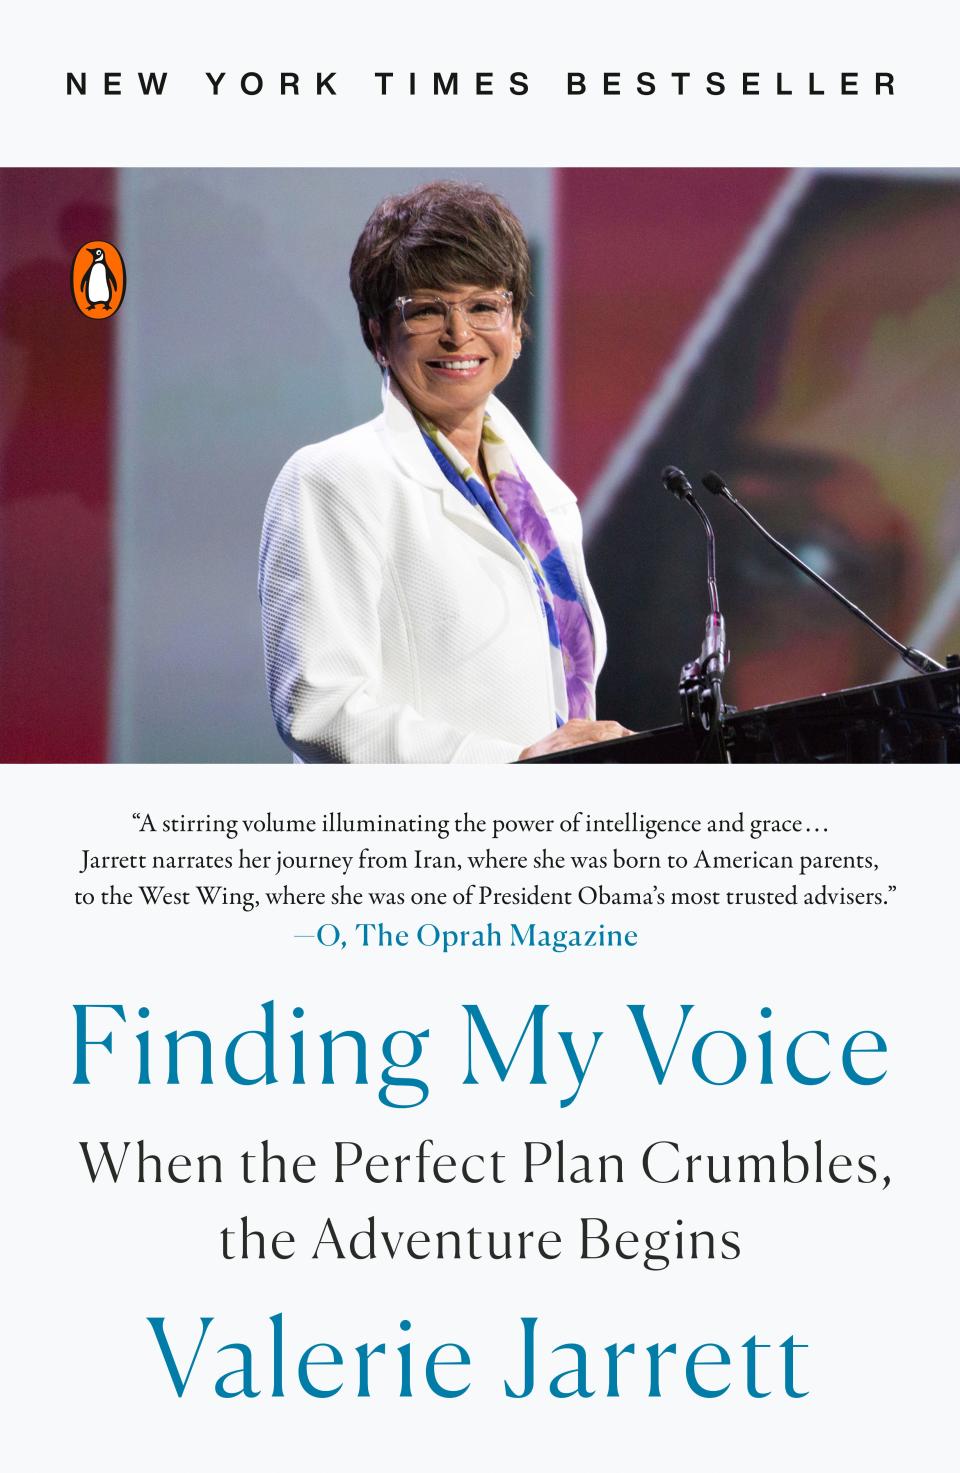 Valerie Jarrett book cover finding my voice